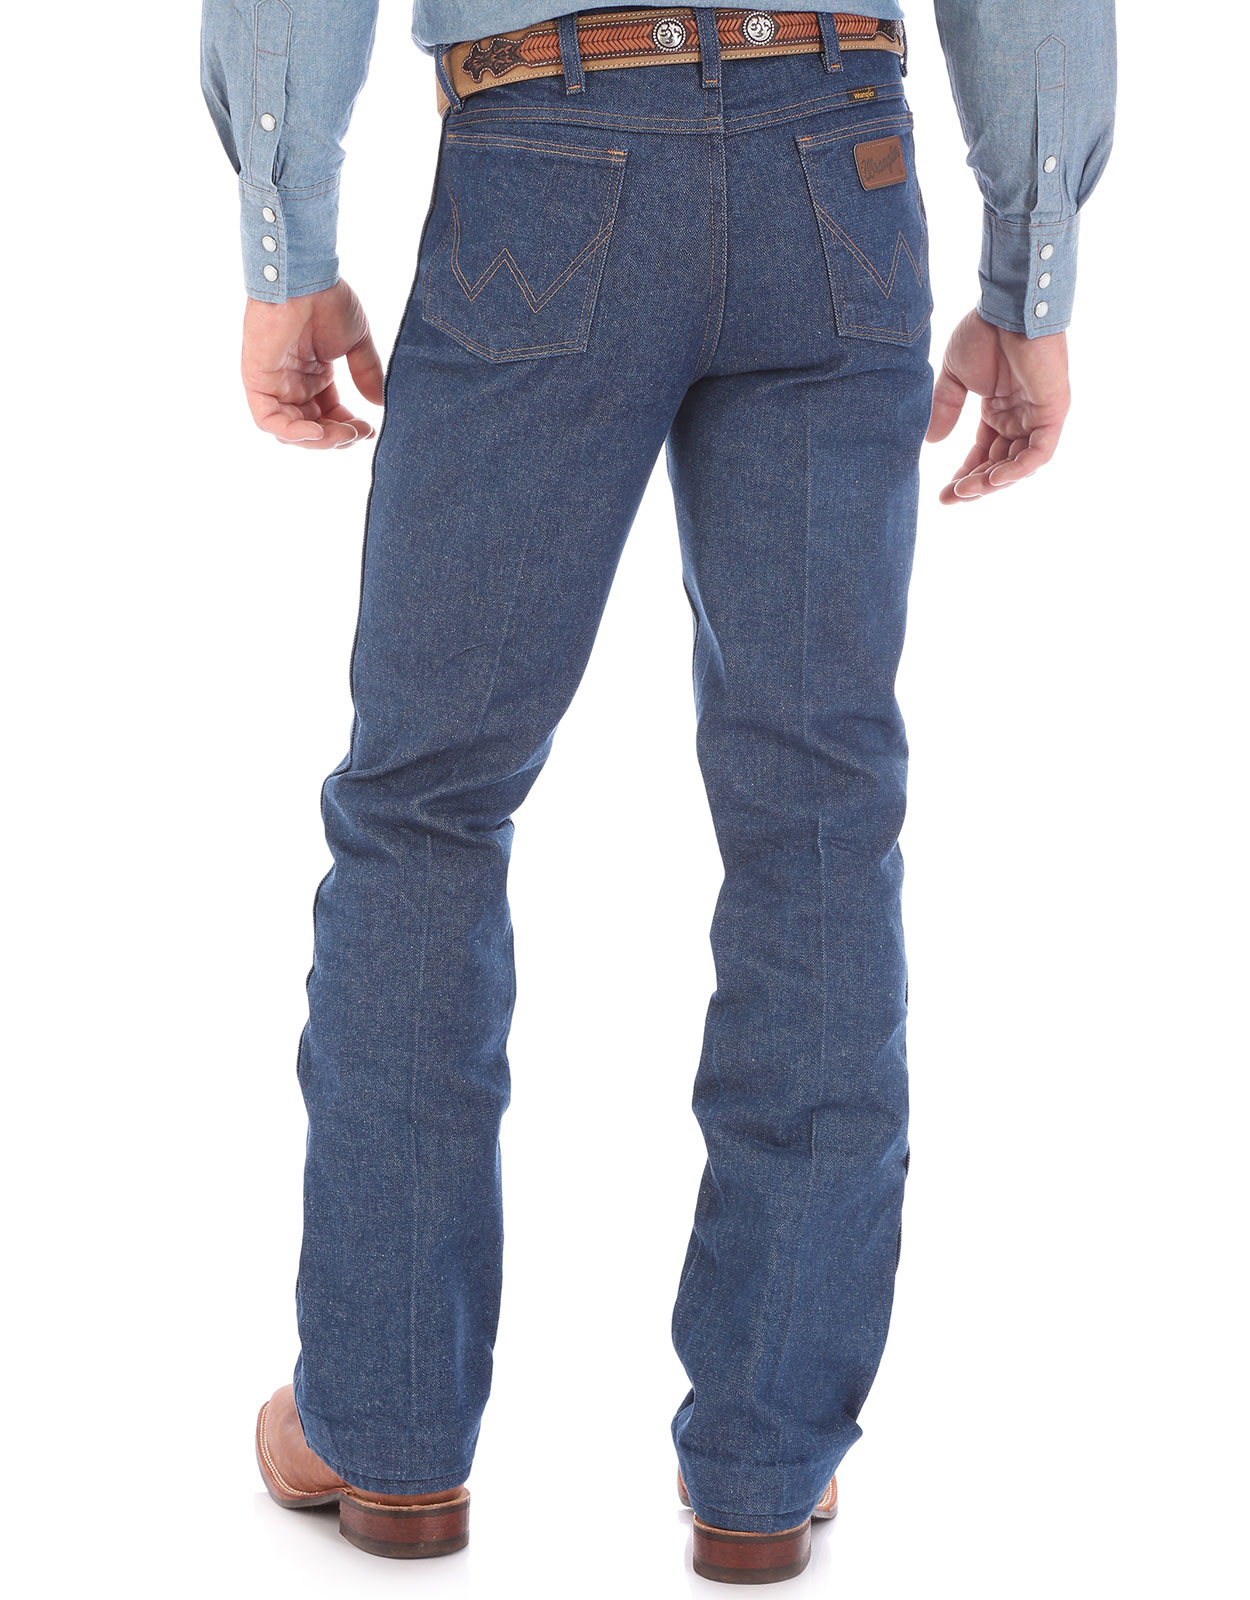 Smeltend Berg Vesuvius garage Wrangler 945 Boot Cut Cowboy Jeans for Men from Langston's